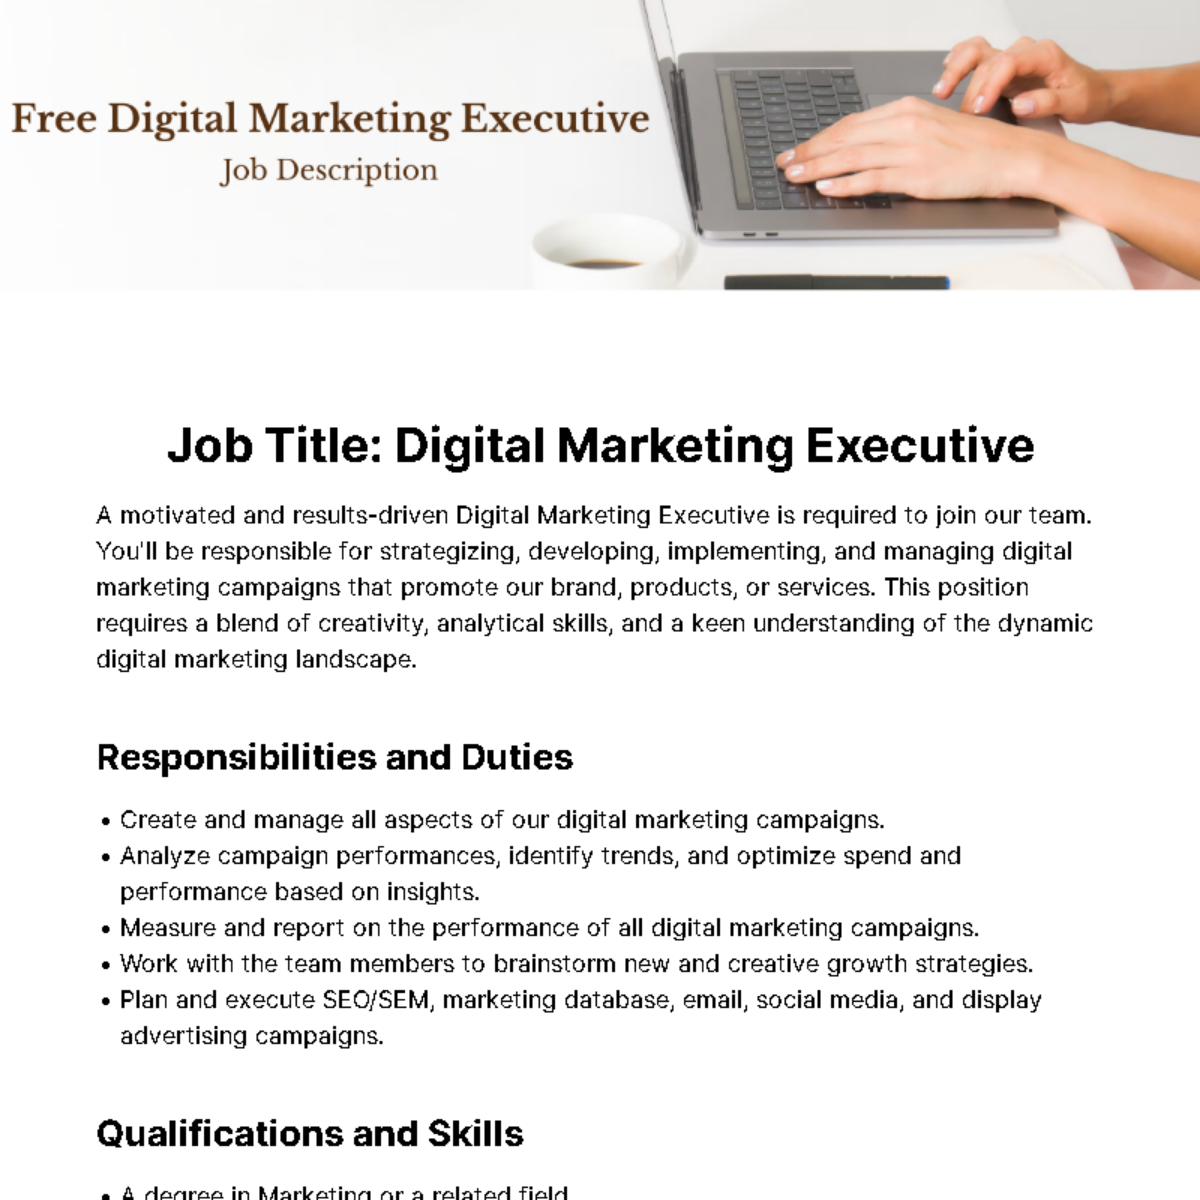 Free Digital Marketing Executive Job Description Template